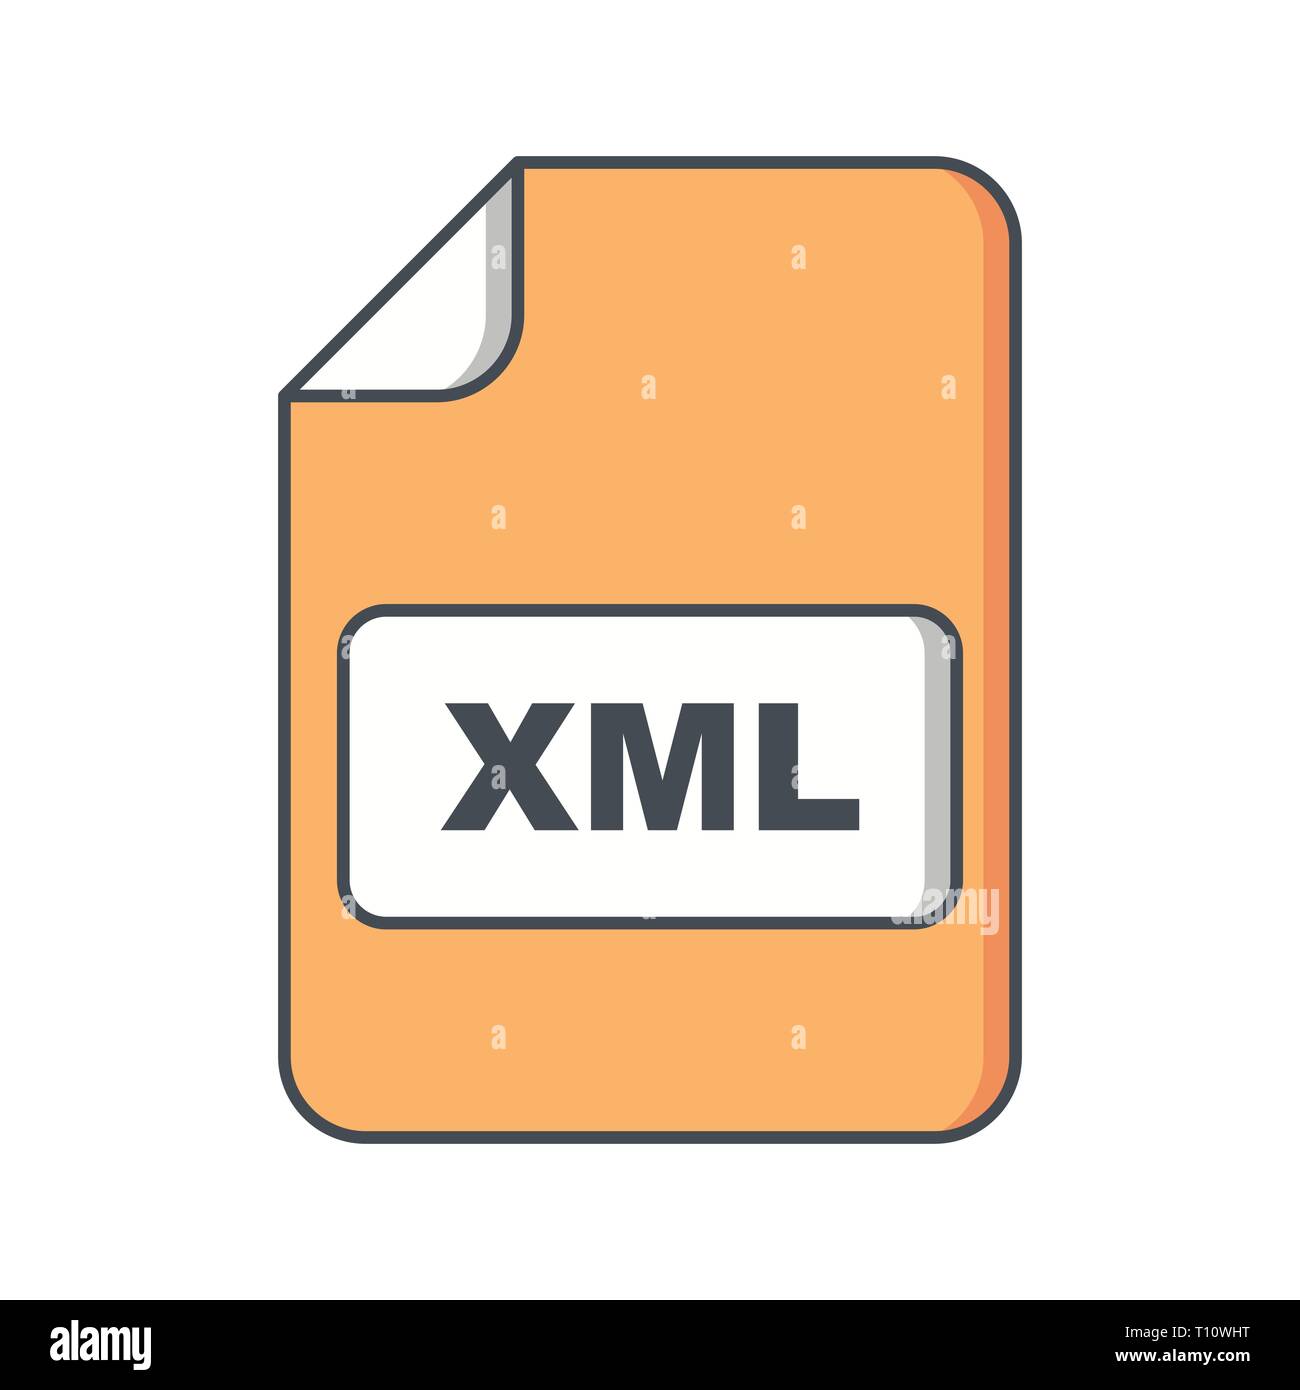 xml icon 16x16